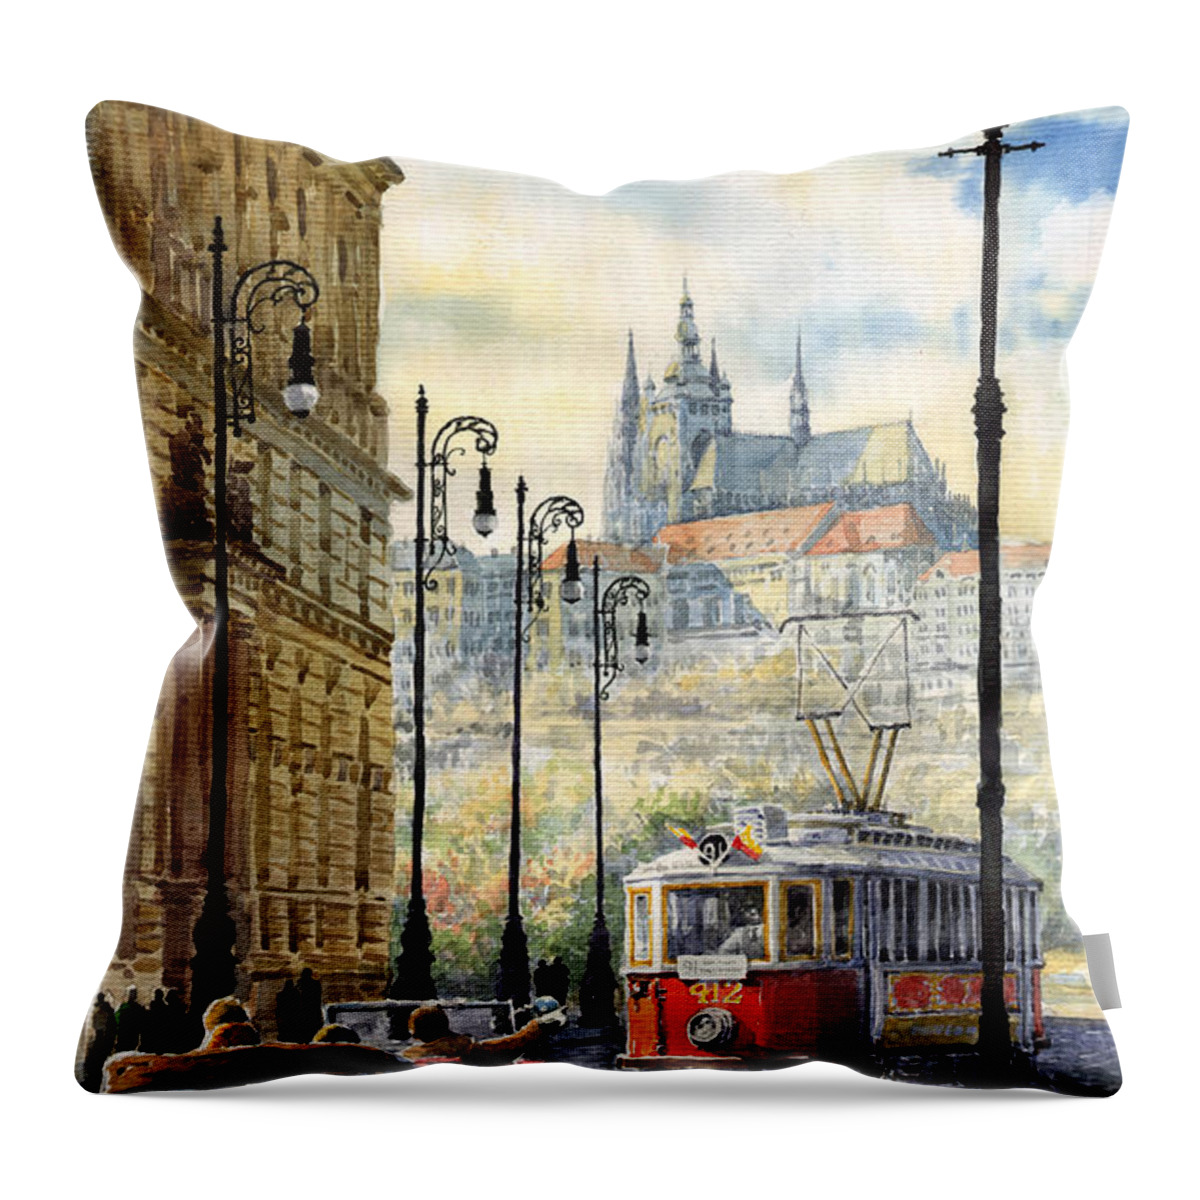 Architecture Throw Pillow featuring the painting Prague Kaprova Street by Yuriy Shevchuk